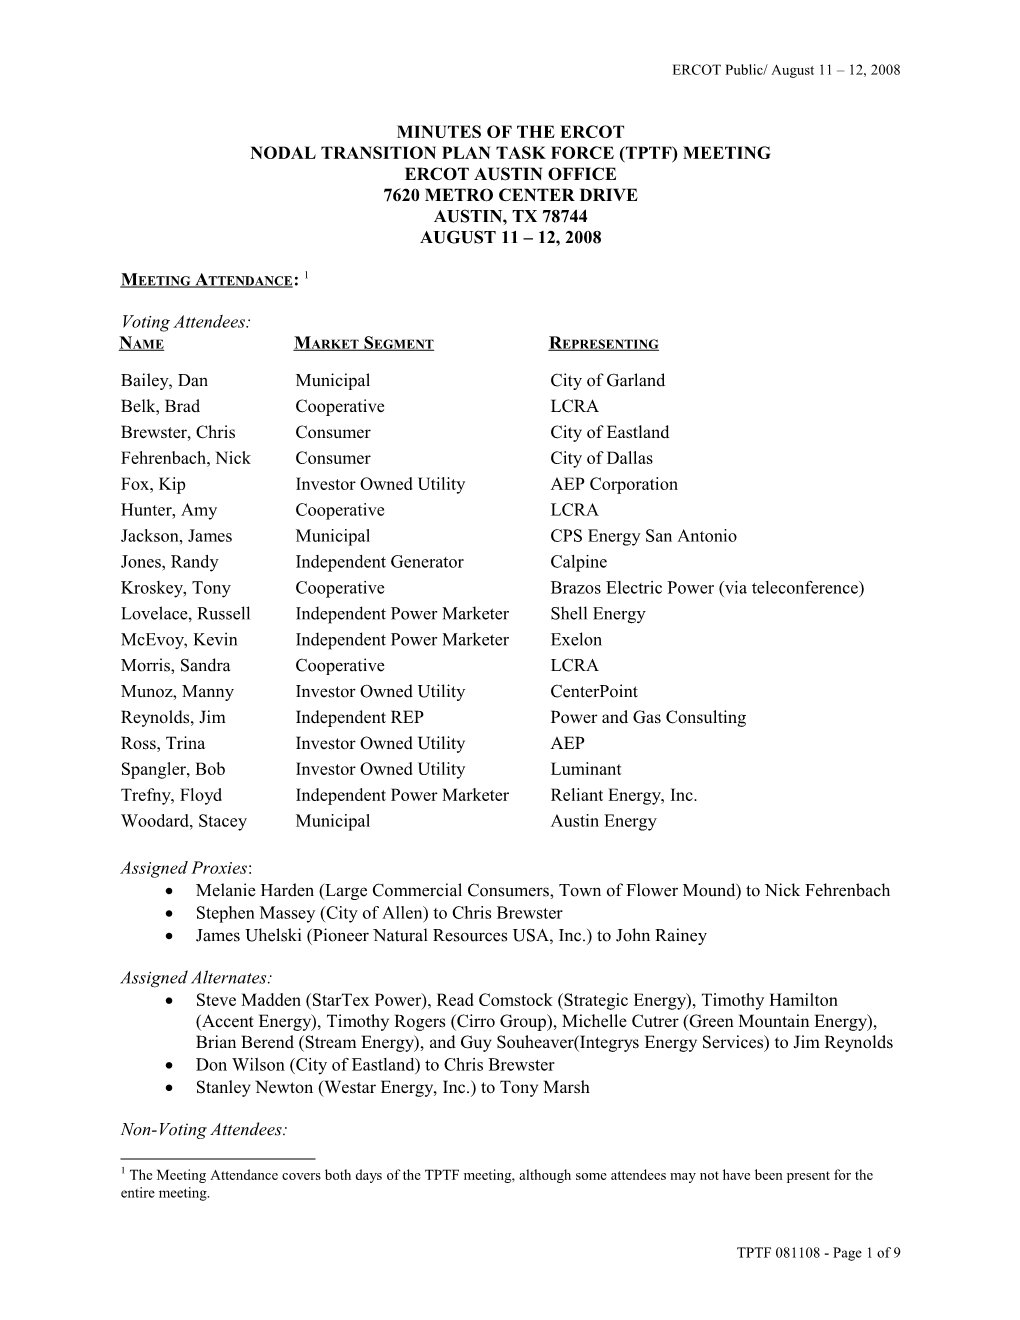 TPTF Draft Agenda Items: July 21 23, 2008